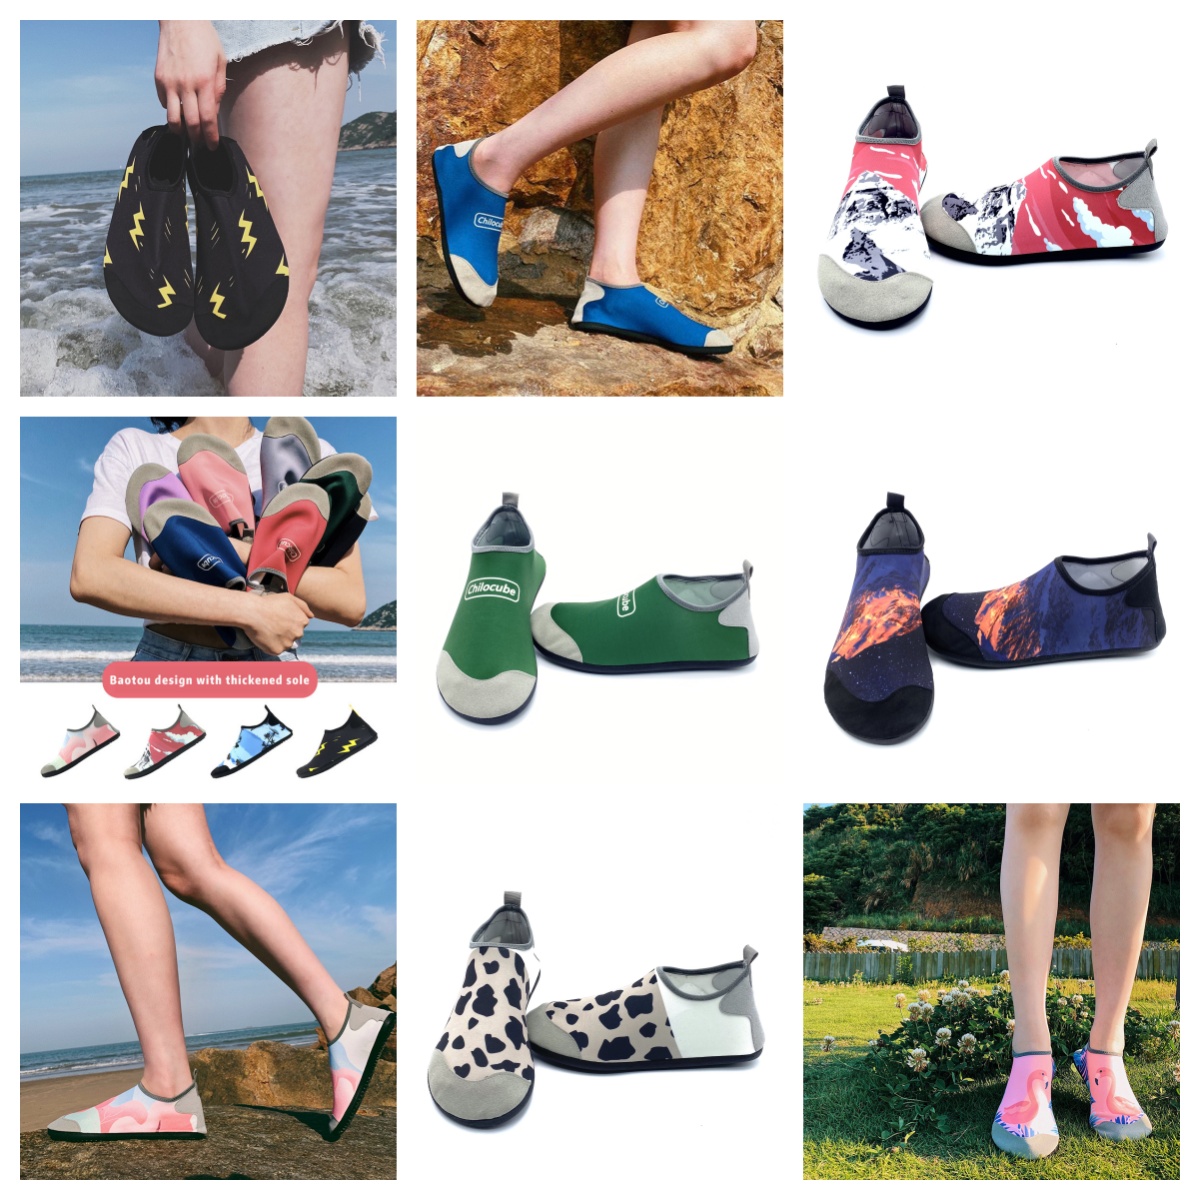 Zapatos atléticos sandalia gai hombre mujer zapato de vadeo descalzo zapatos deportivos de natación verdes playas al aire libre sandal pareja talla de calzado EUR 35-46